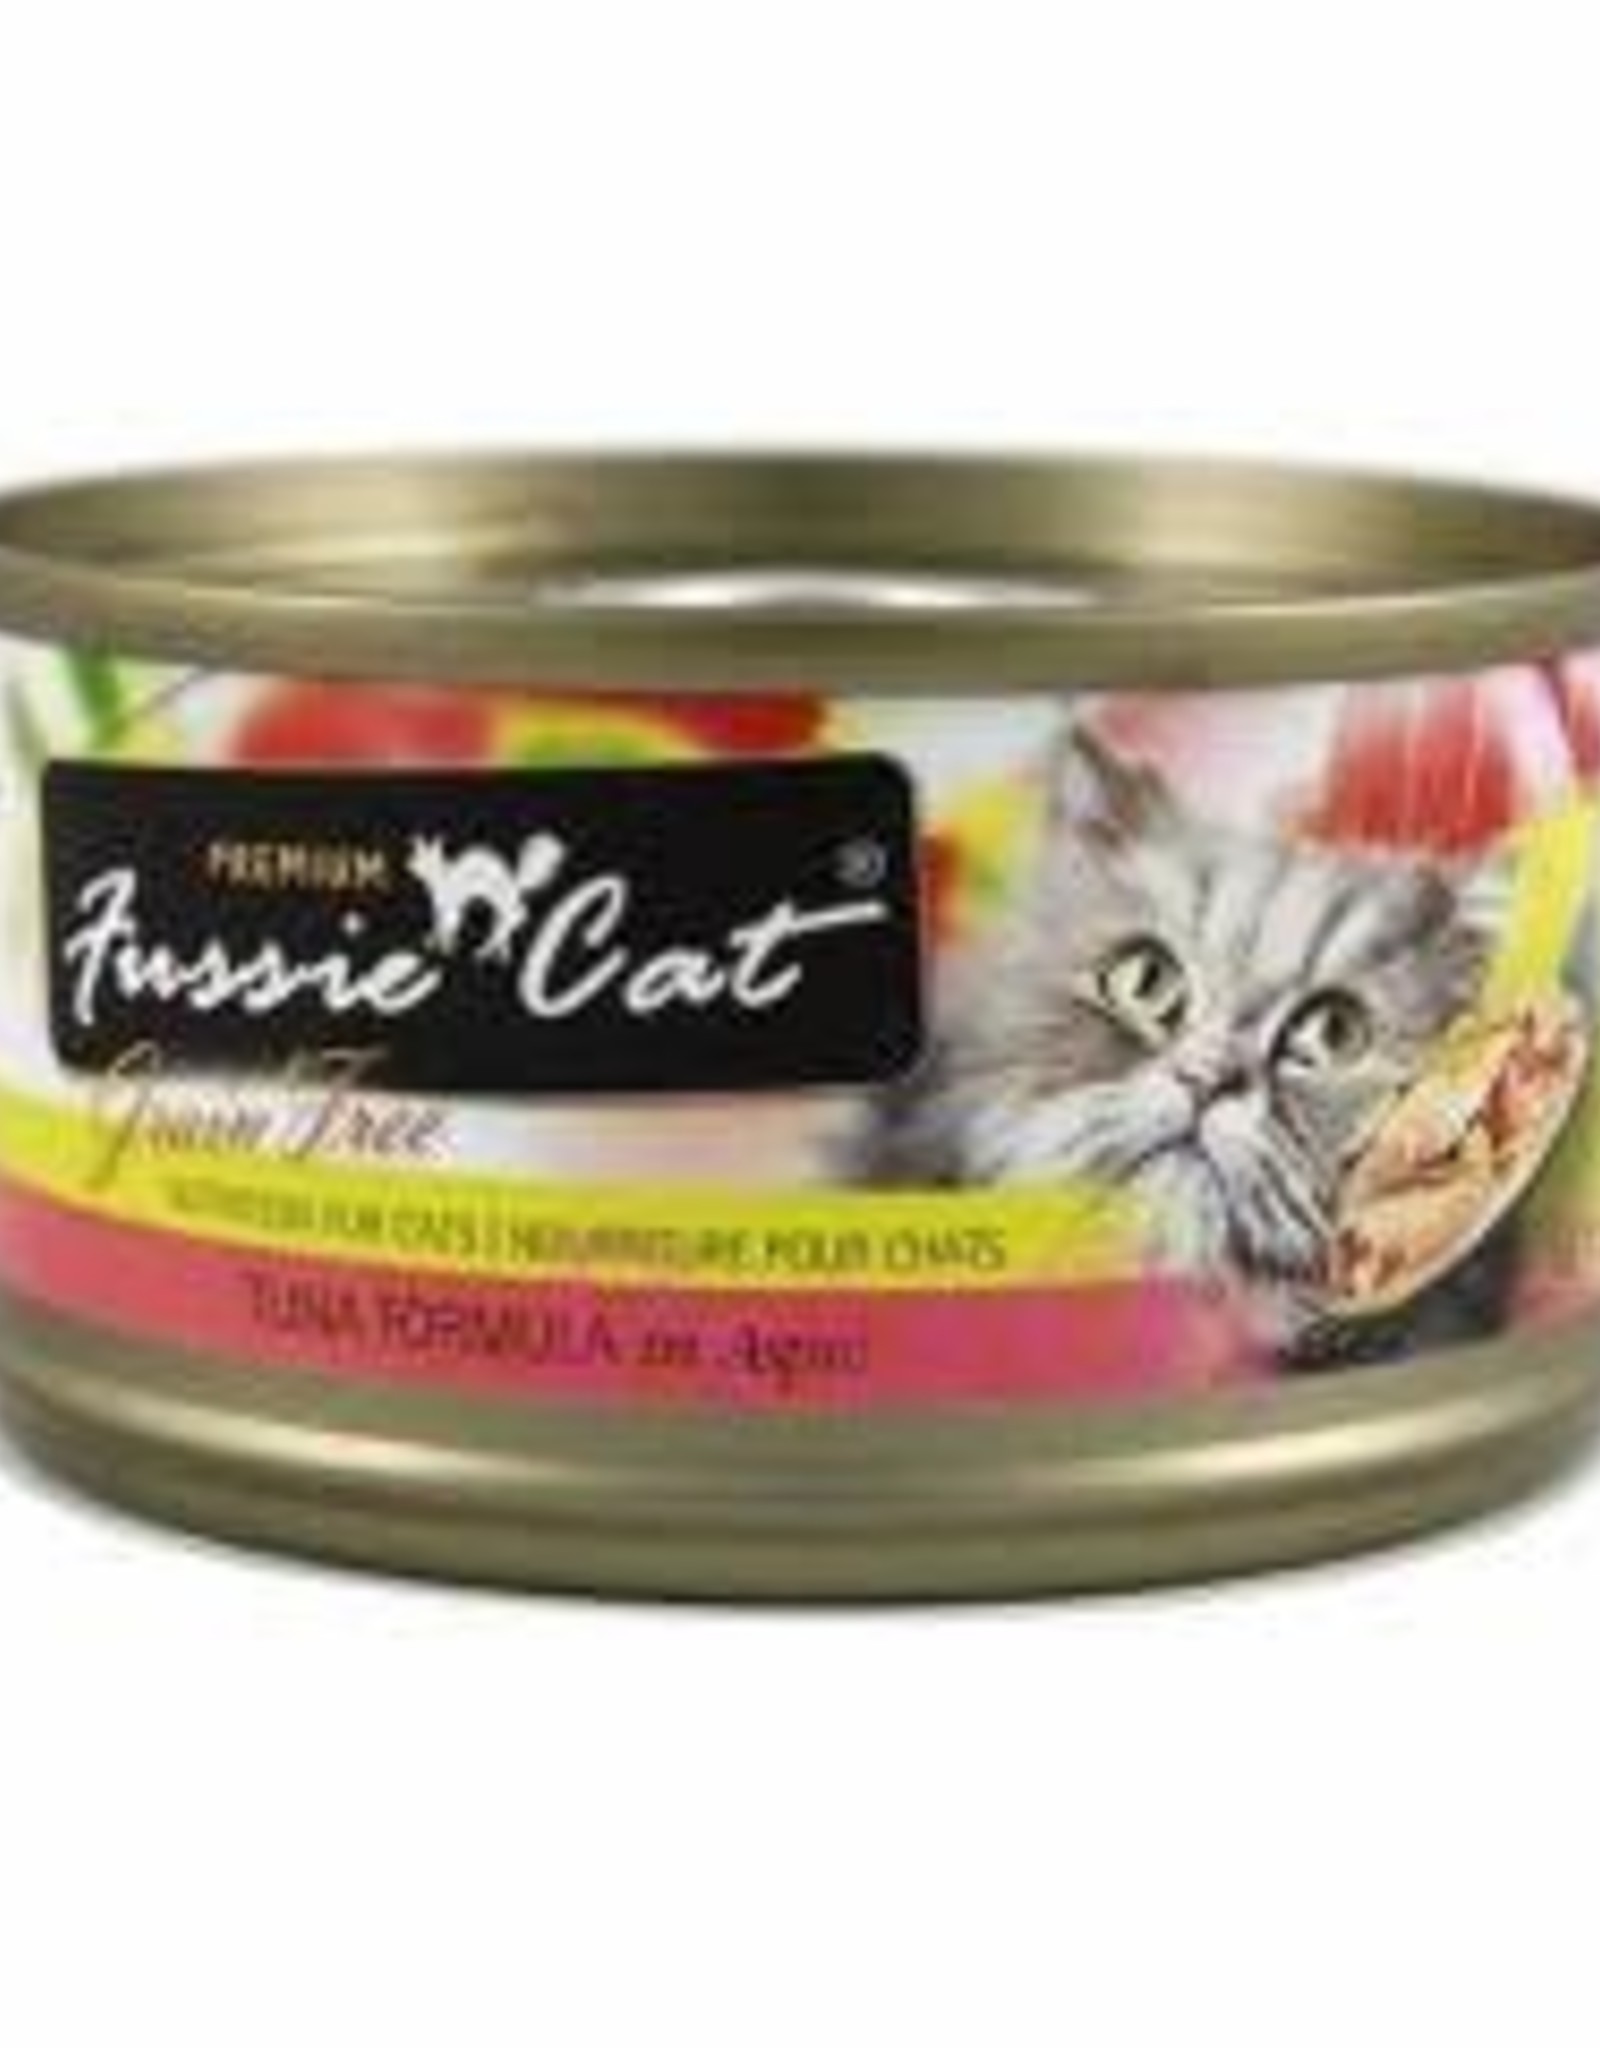 PETS GLOBAL FUSSIE CAT Premium Grain Free Tuna